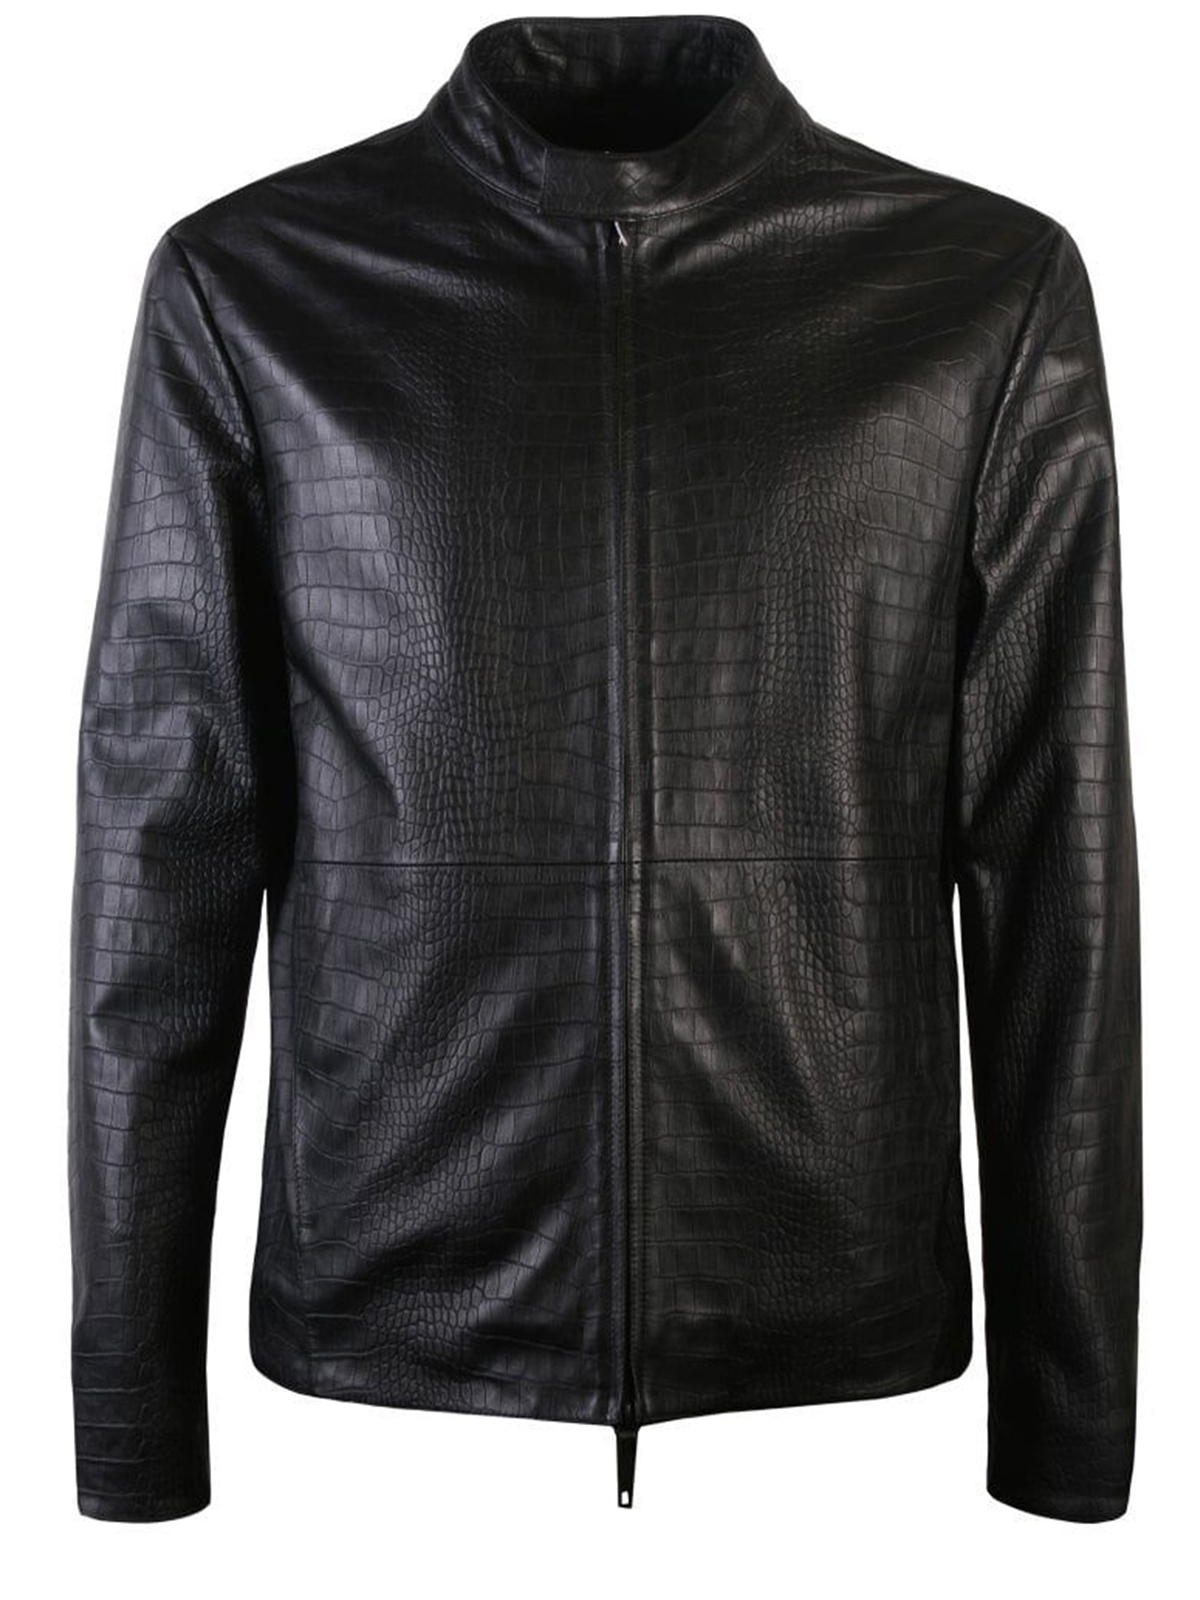 Armani Collezioni Black Leather Jacket